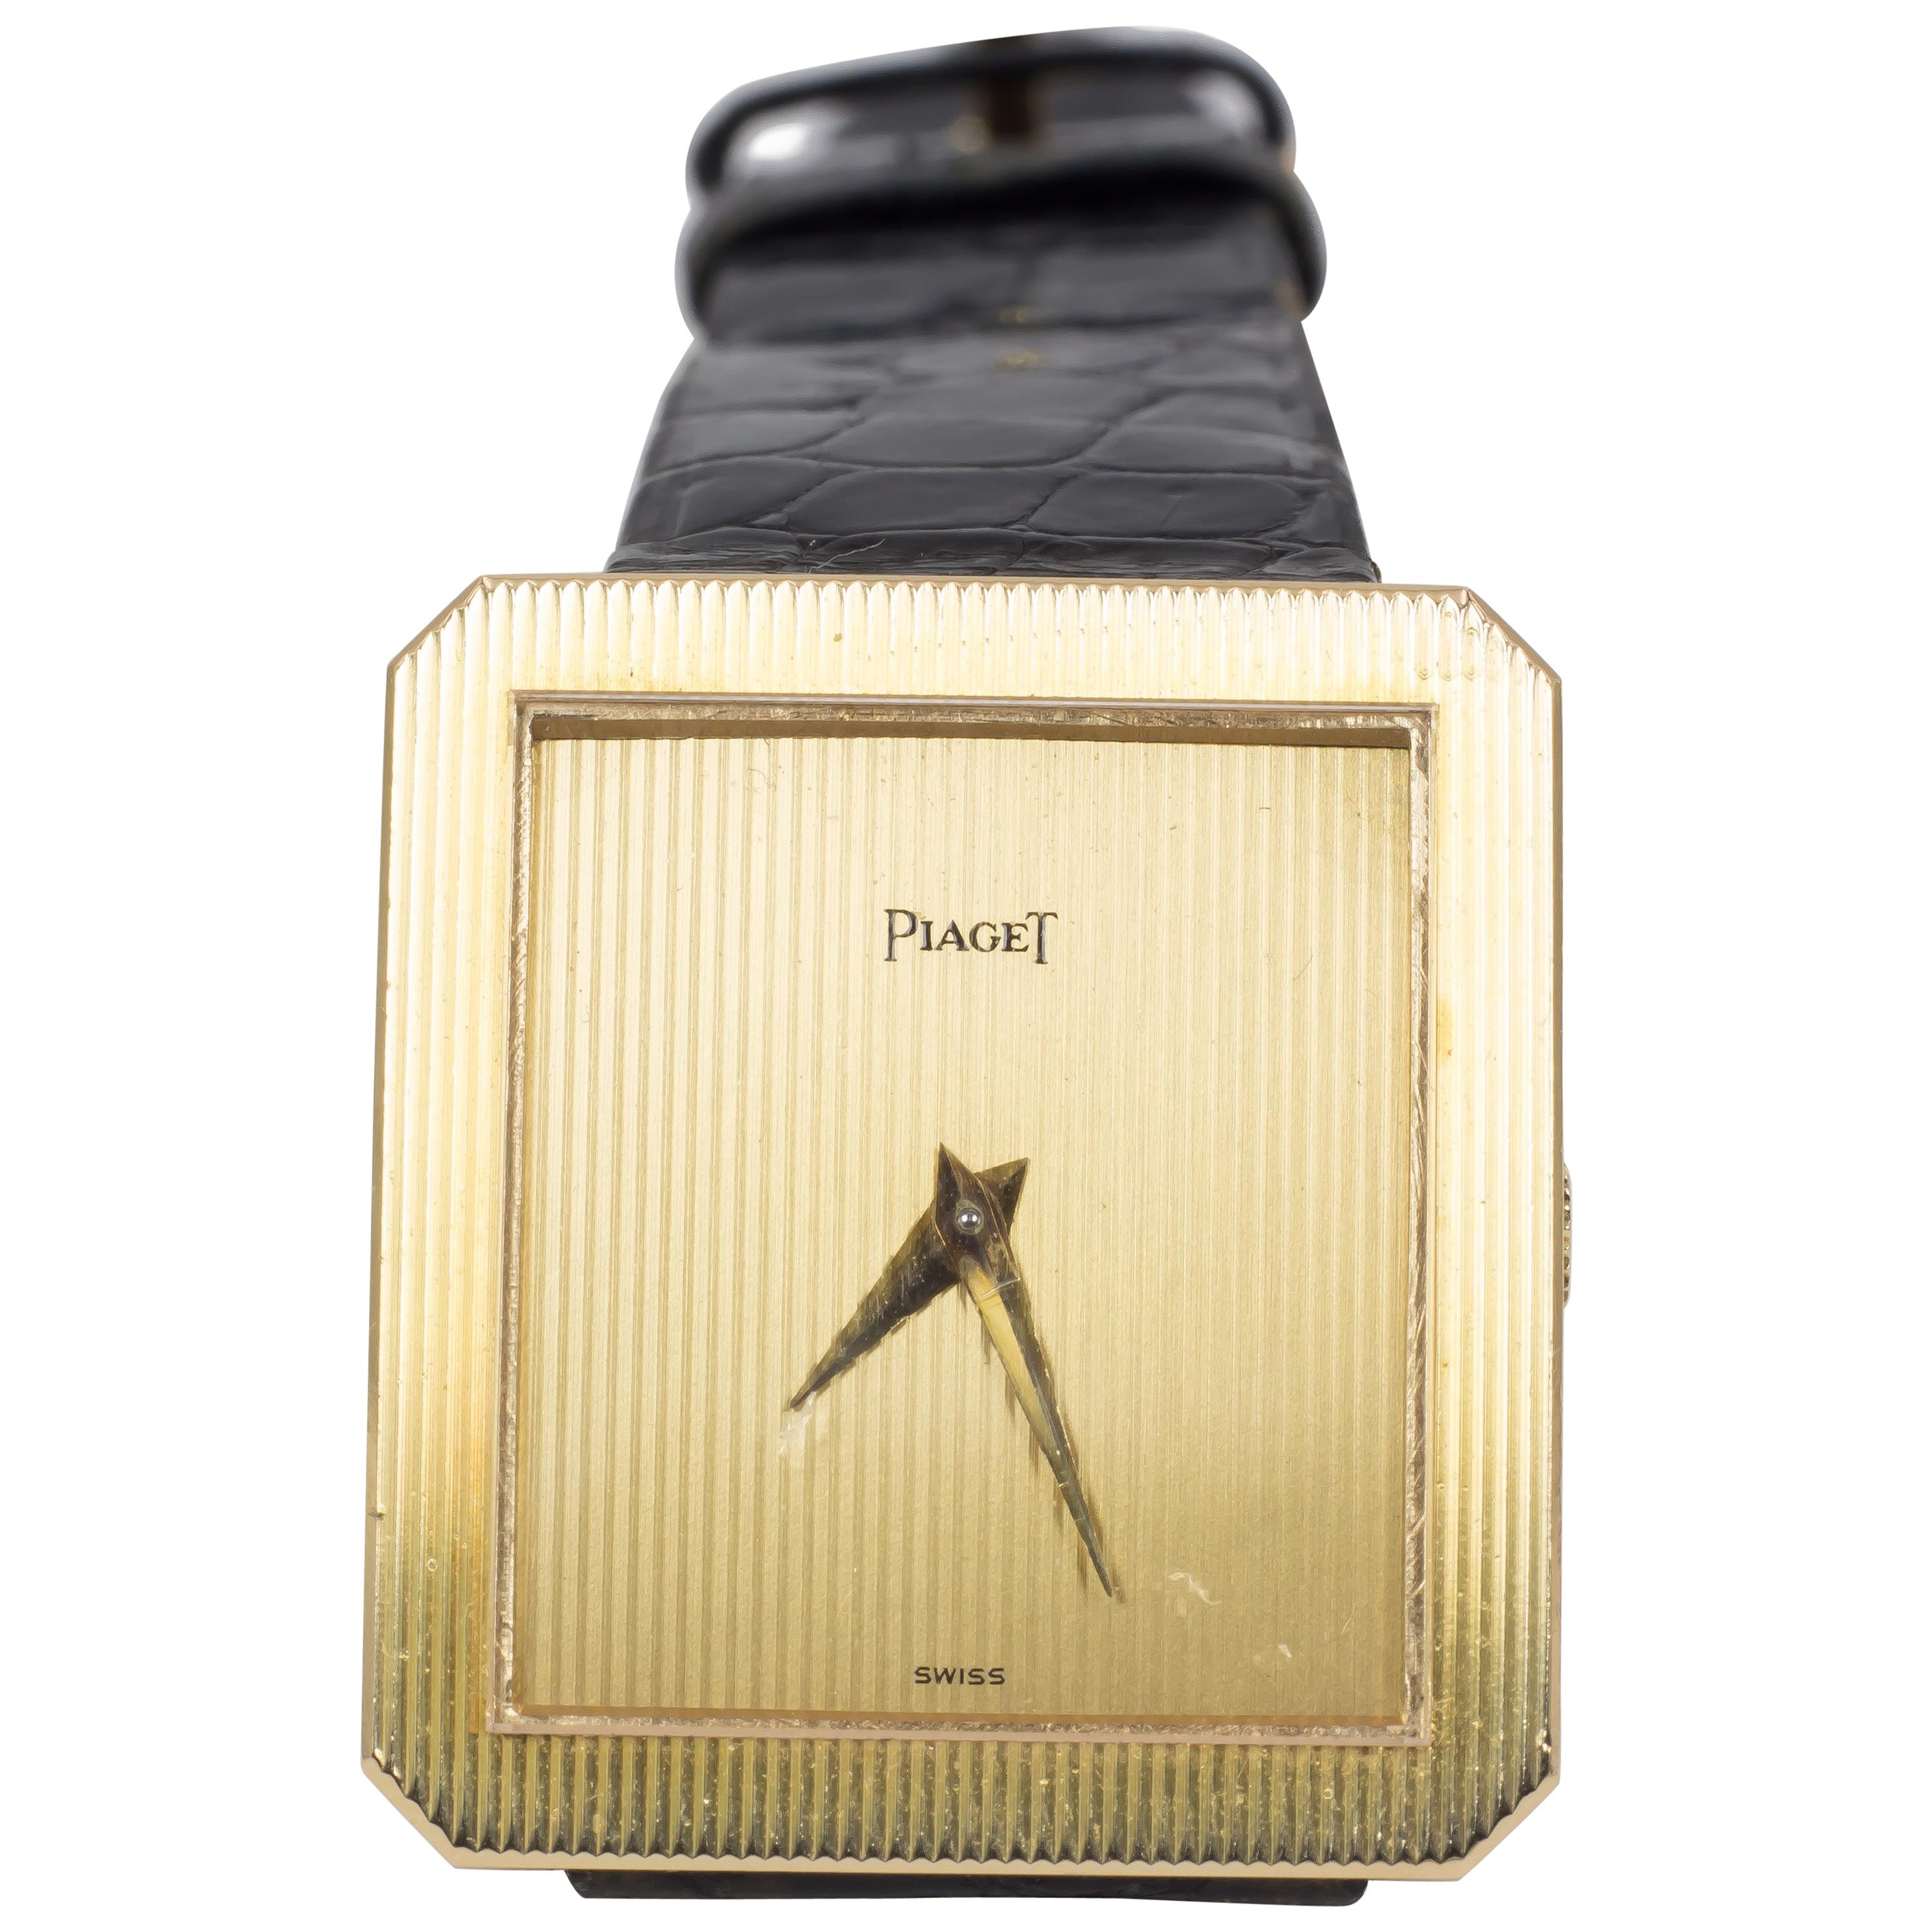 Vintage 18 Karat Gold Piaget Wristwatch, 1980s For Sale